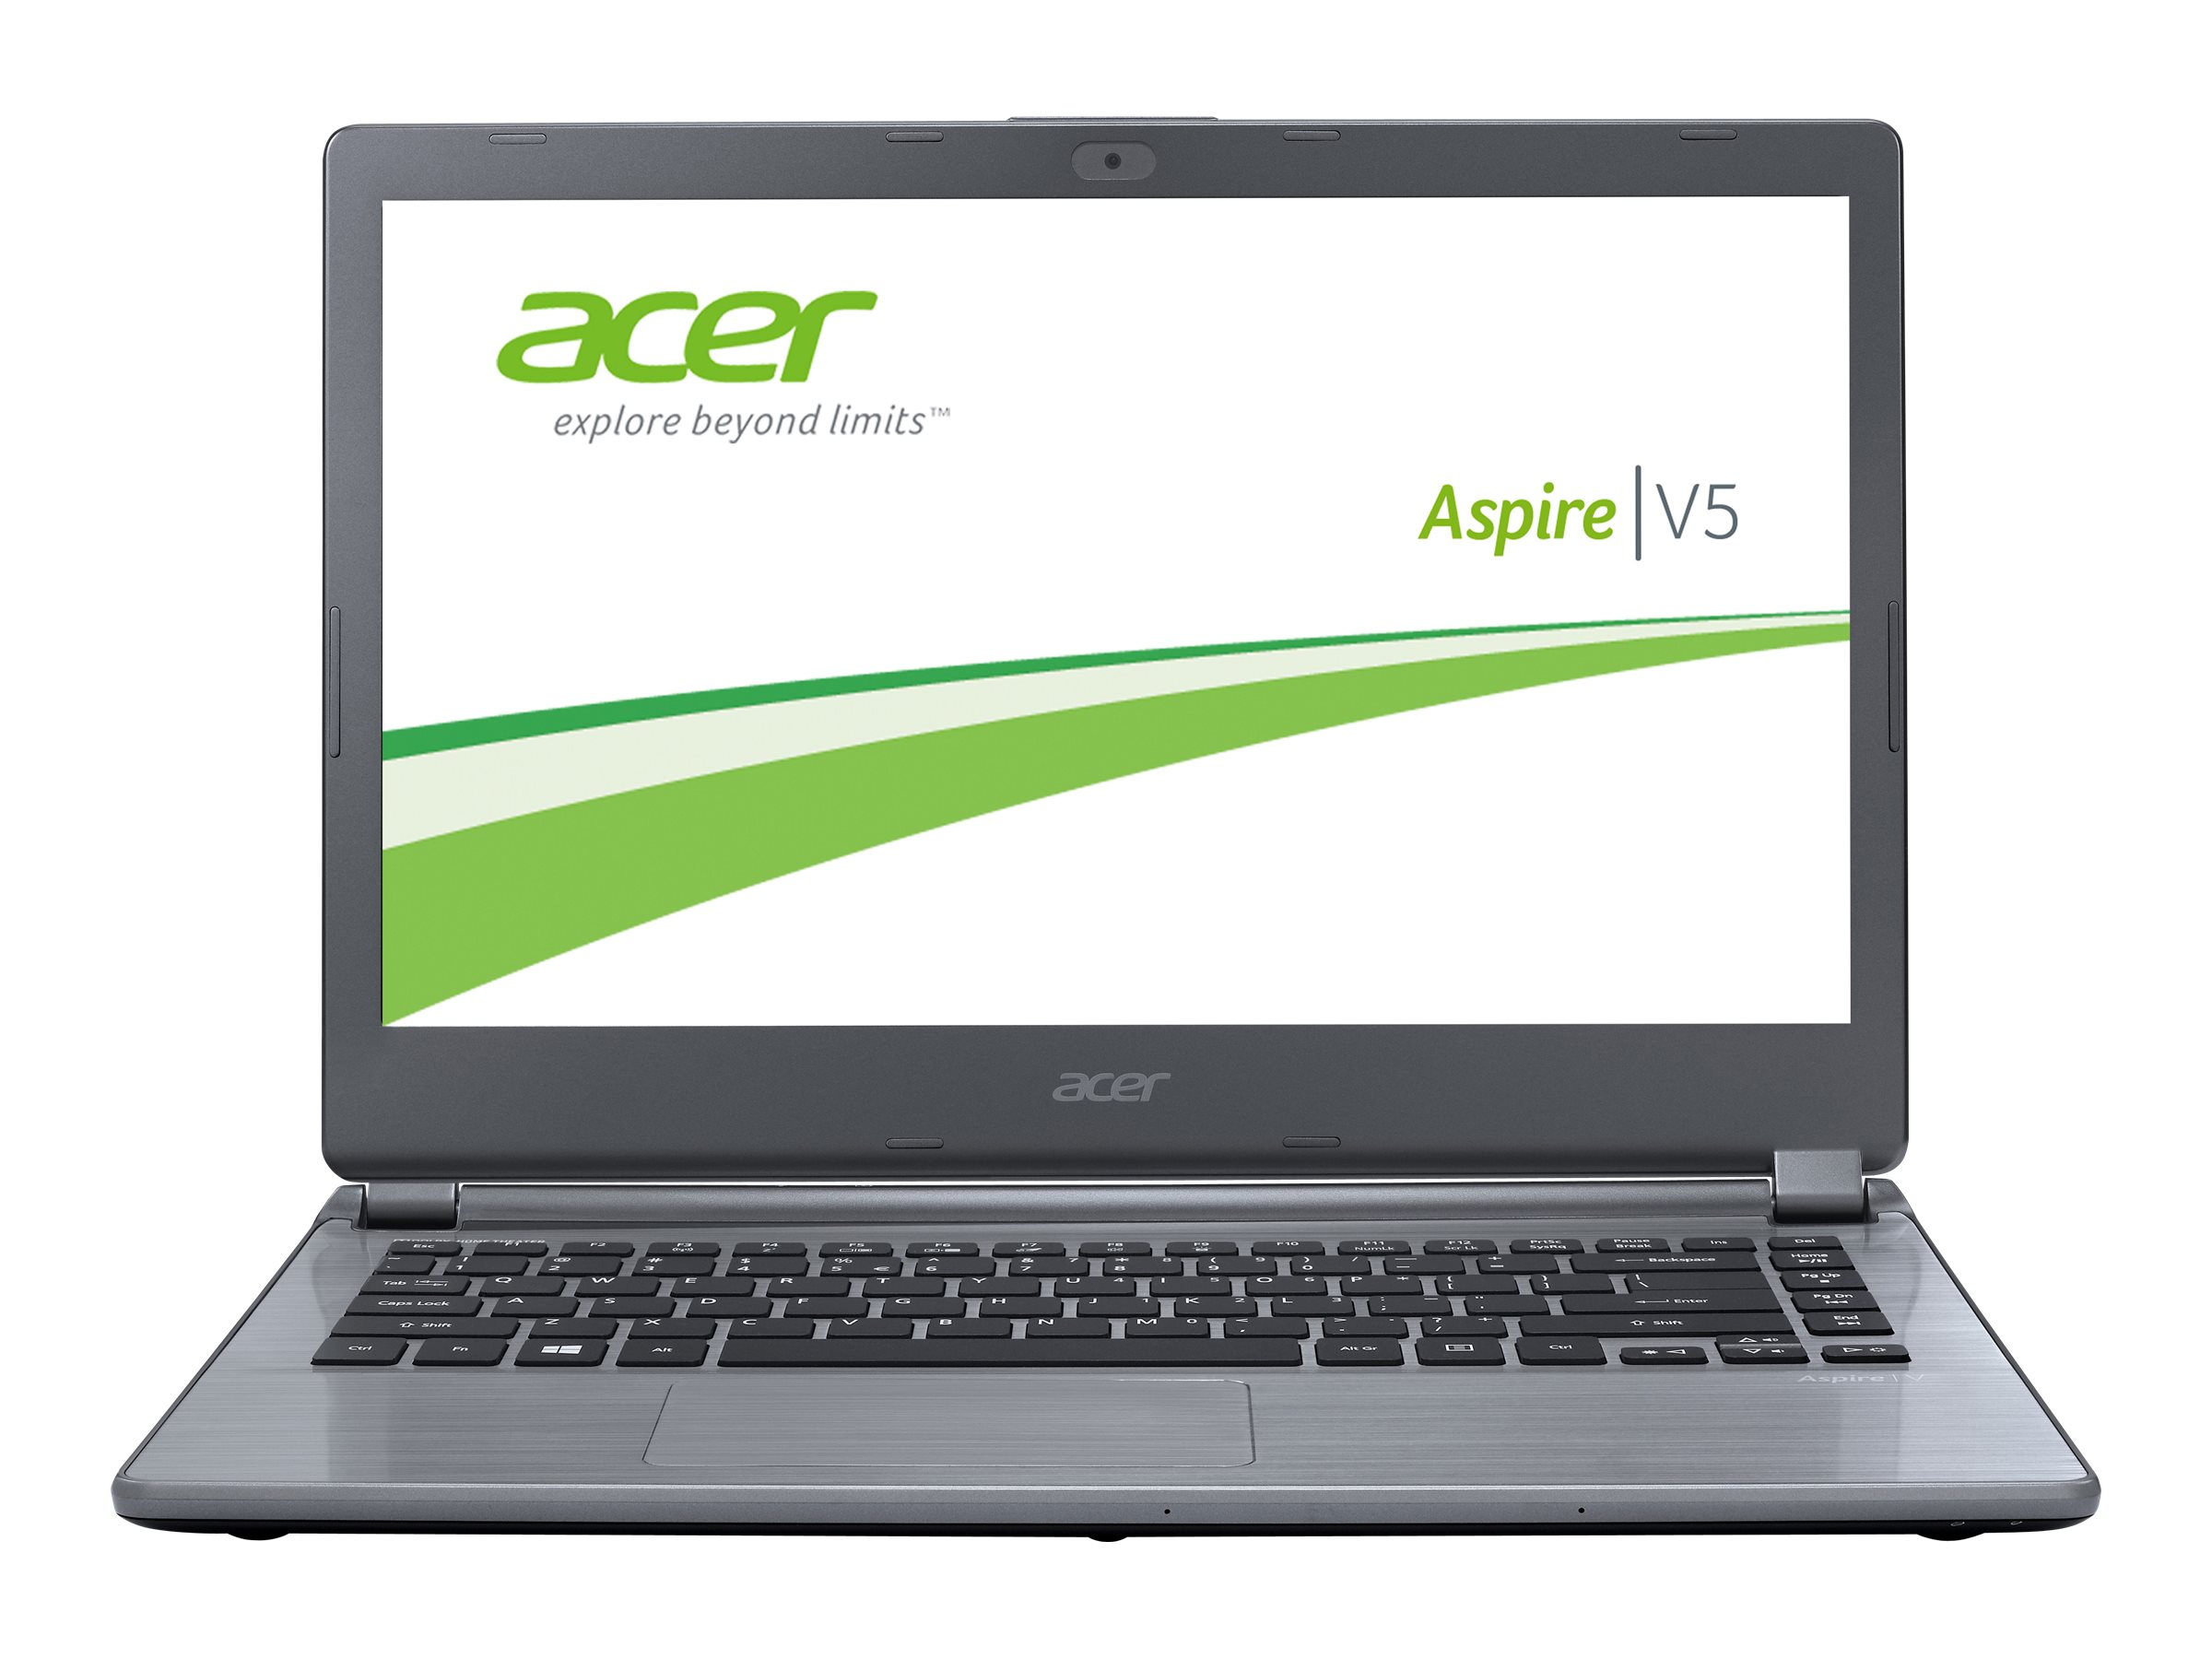 Acer Aspire V5 (473)